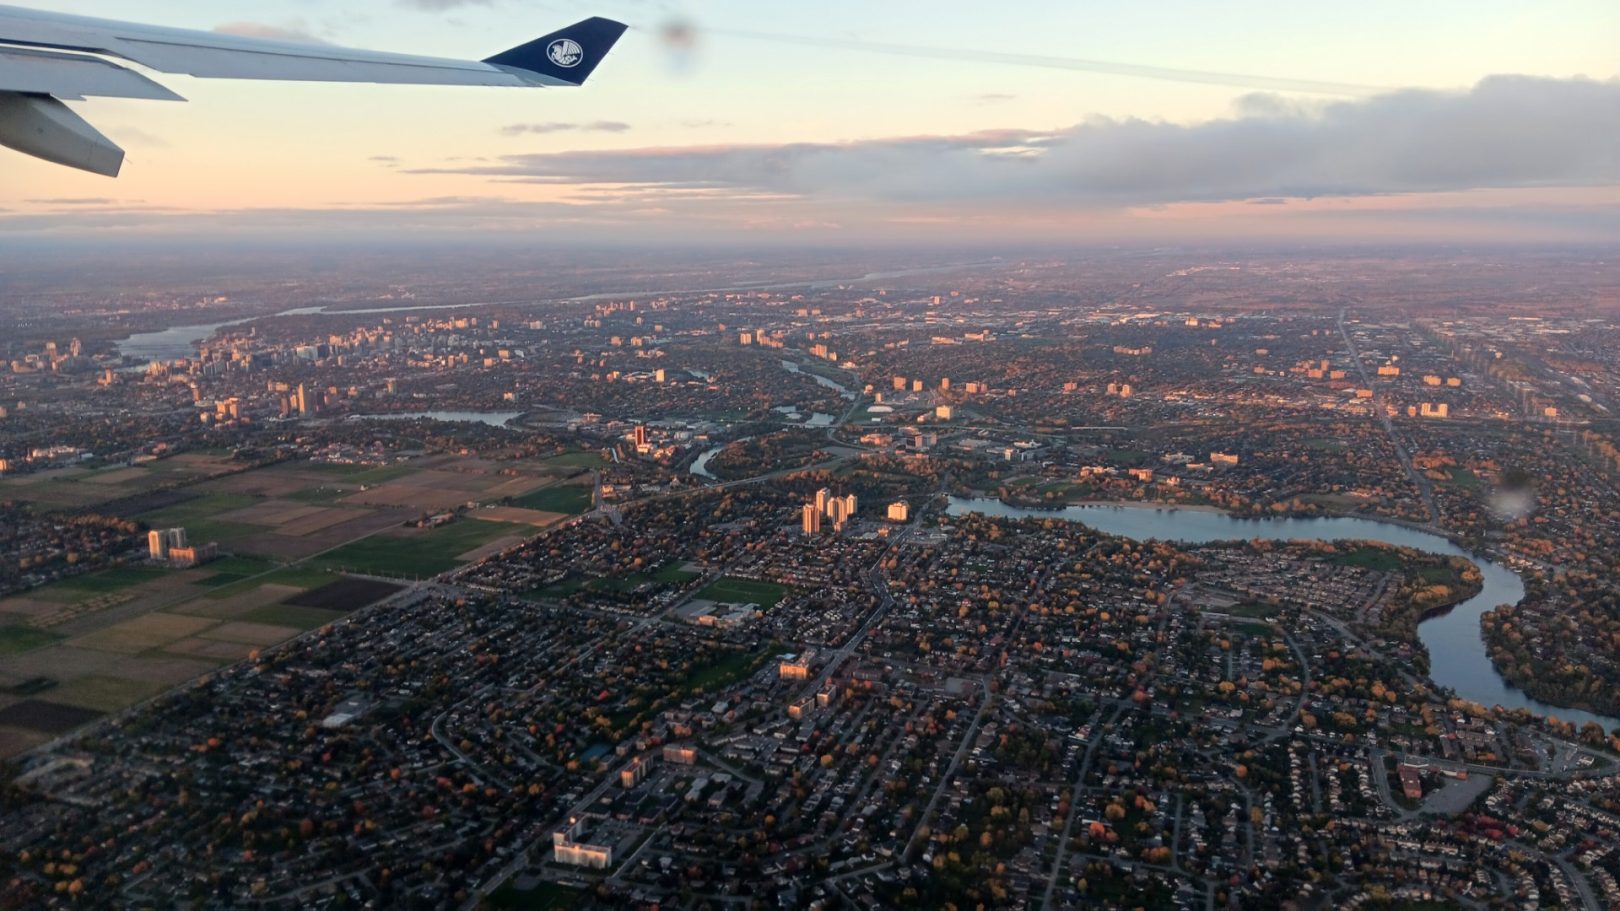 AF 327 Ottawa-Paris, above Ottawa